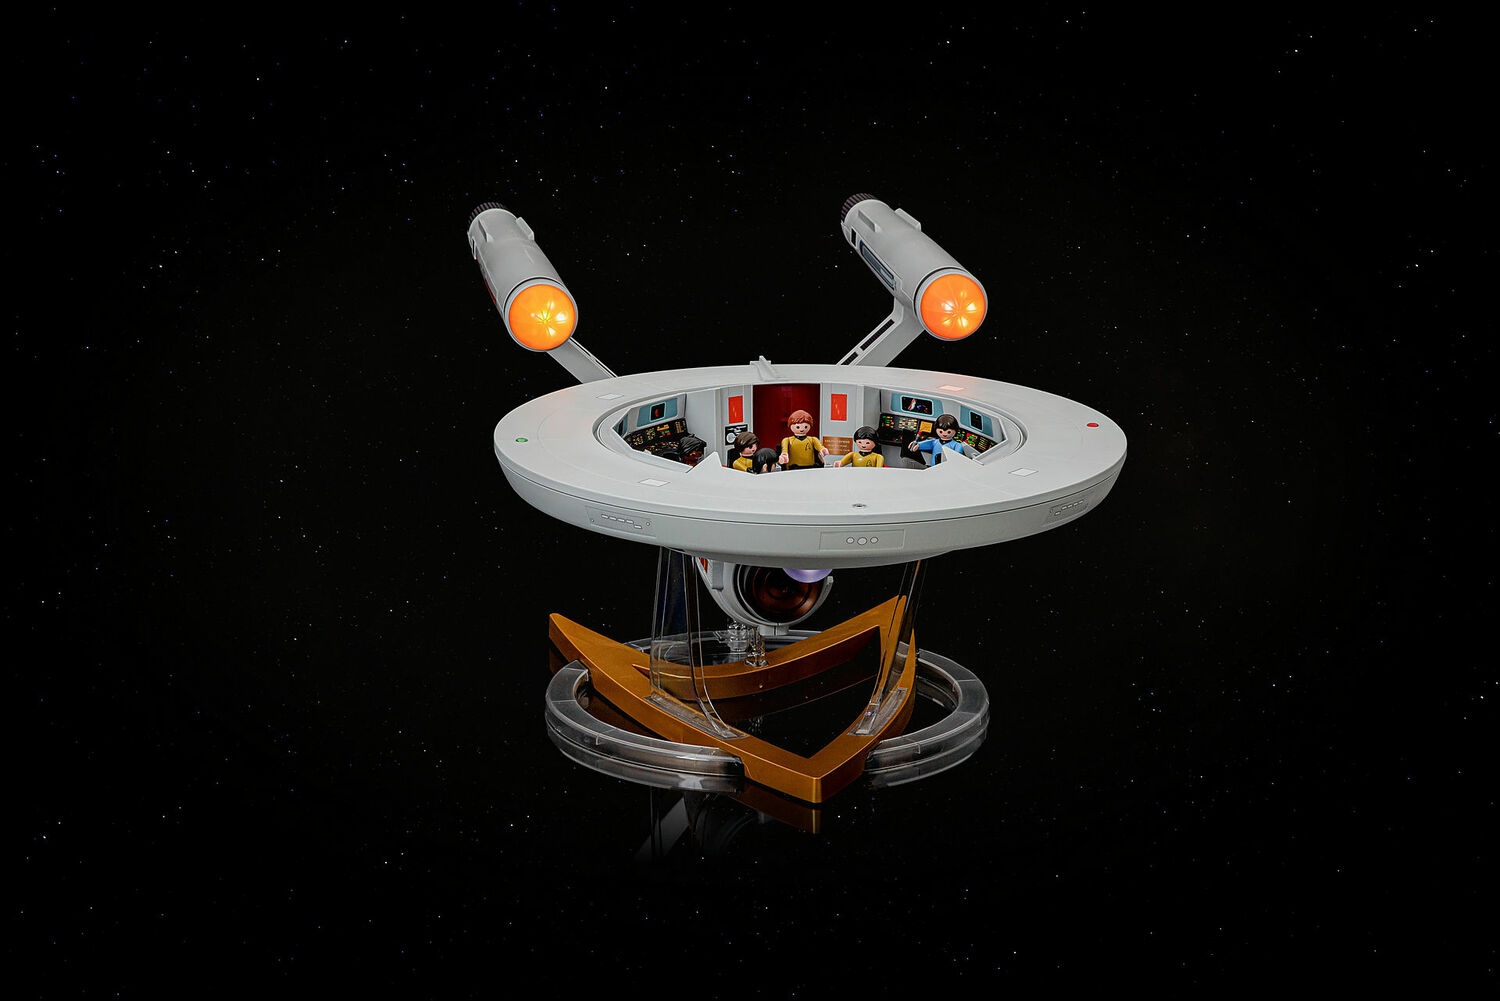 PLAYMOBIL Star Trek figura set - iPon - hardware and software news